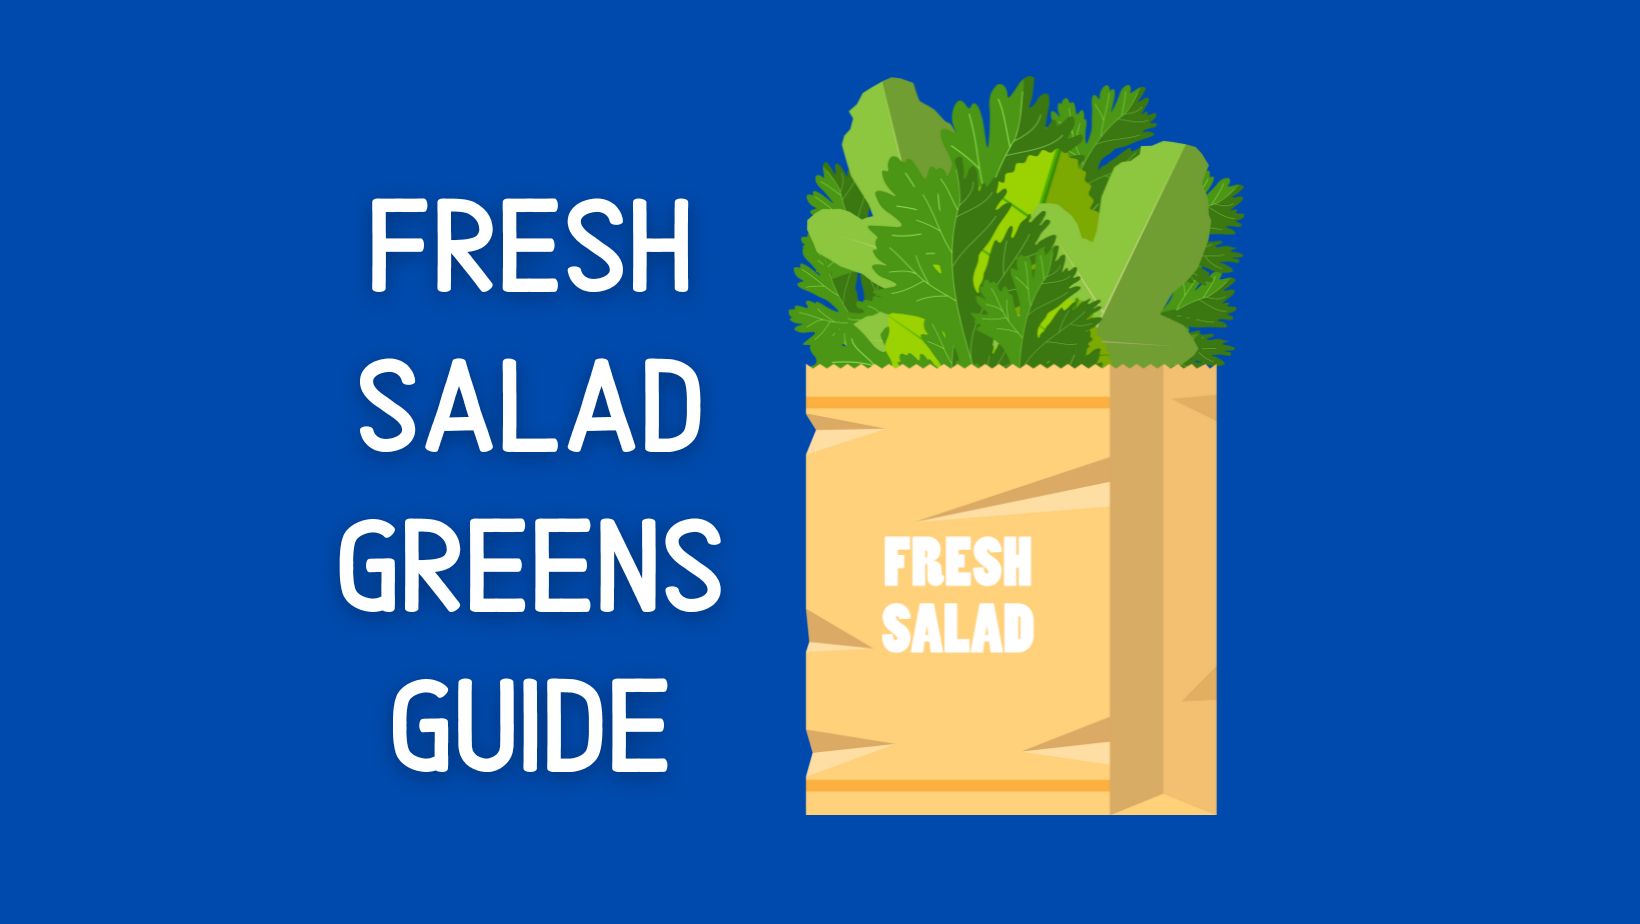 Feast on Fresh Salad Greens 2022 Guide